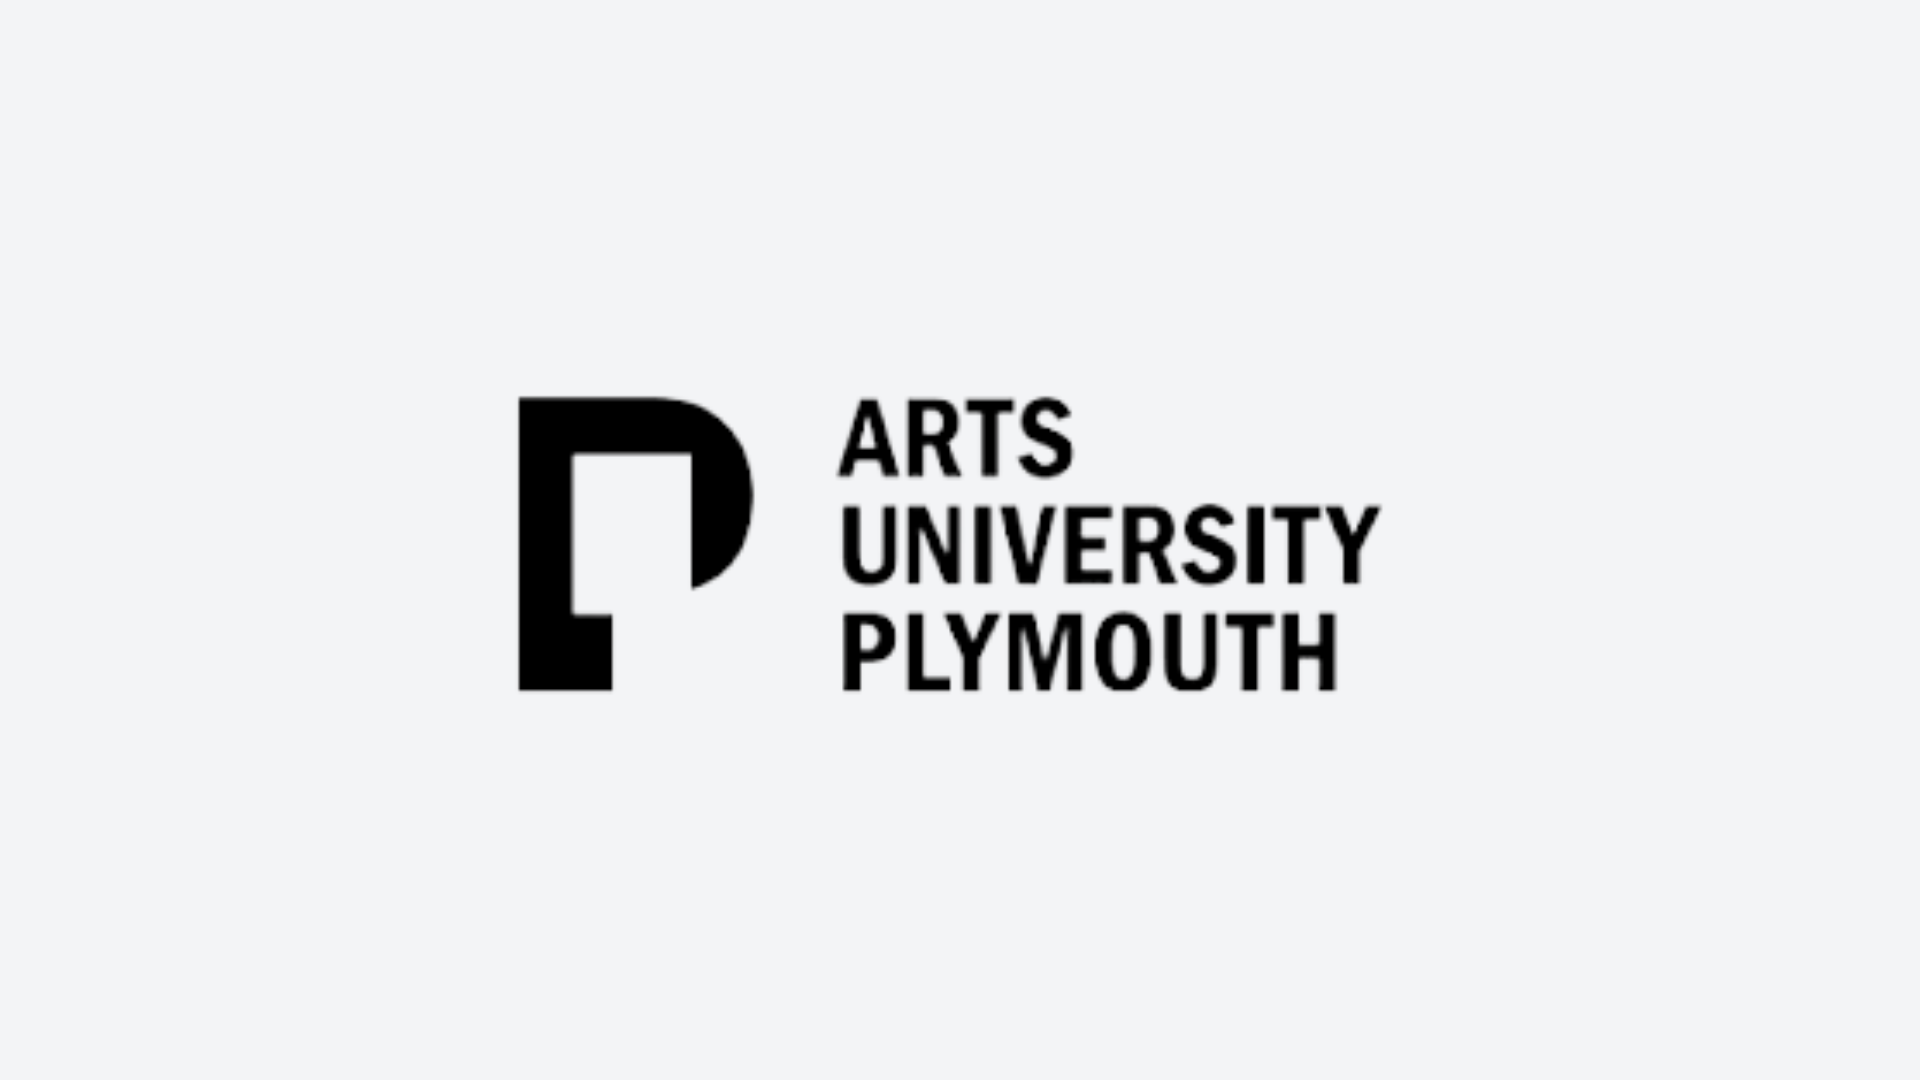 Arts University Plymouth